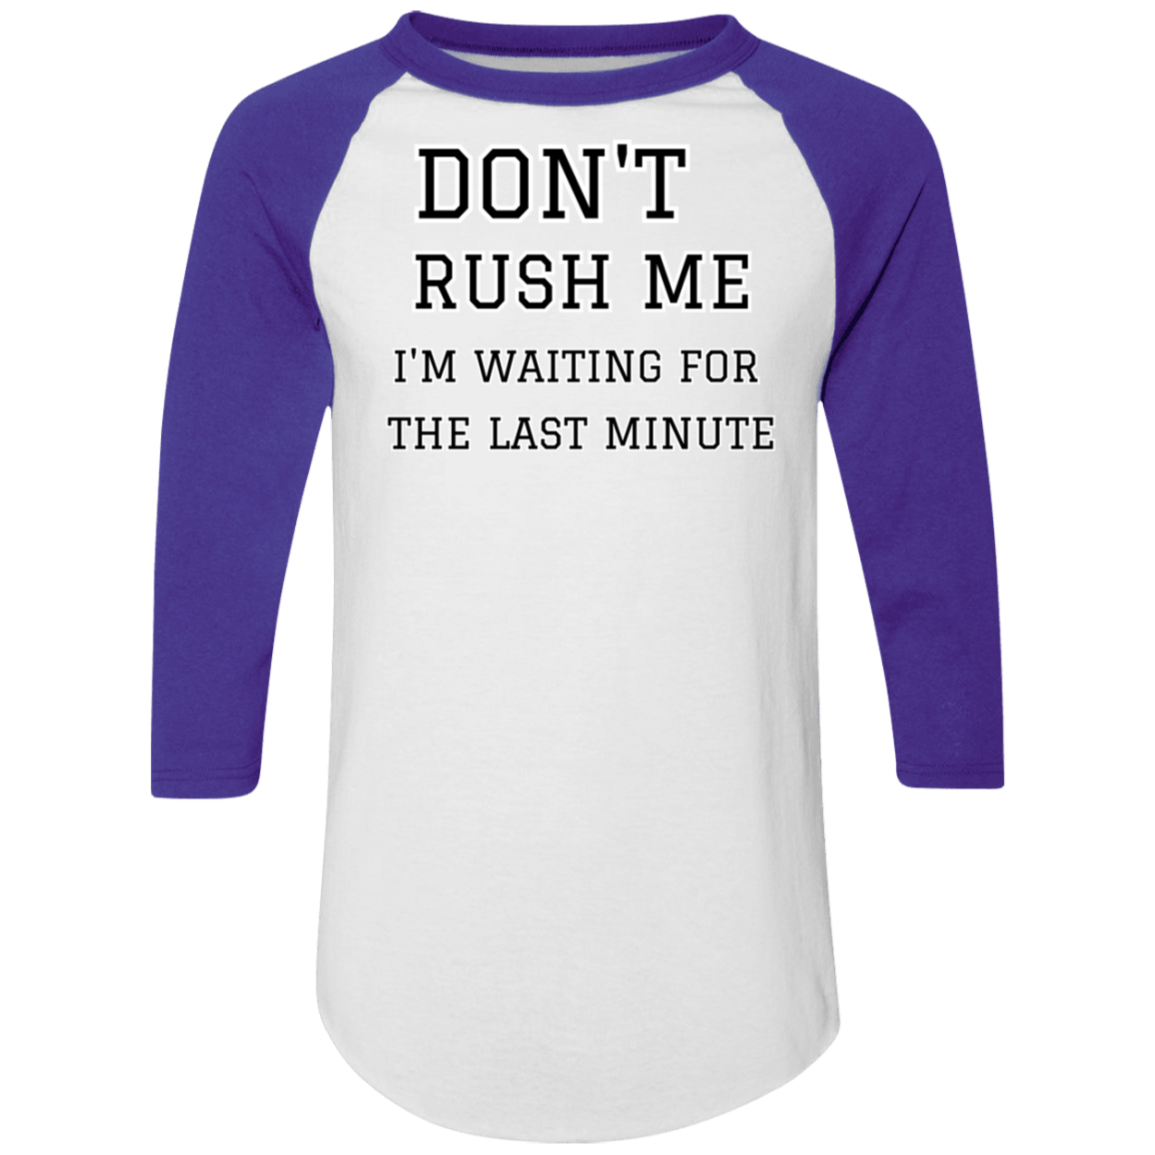 Don't Rush Me - Men's Colorblock Raglan Jersey